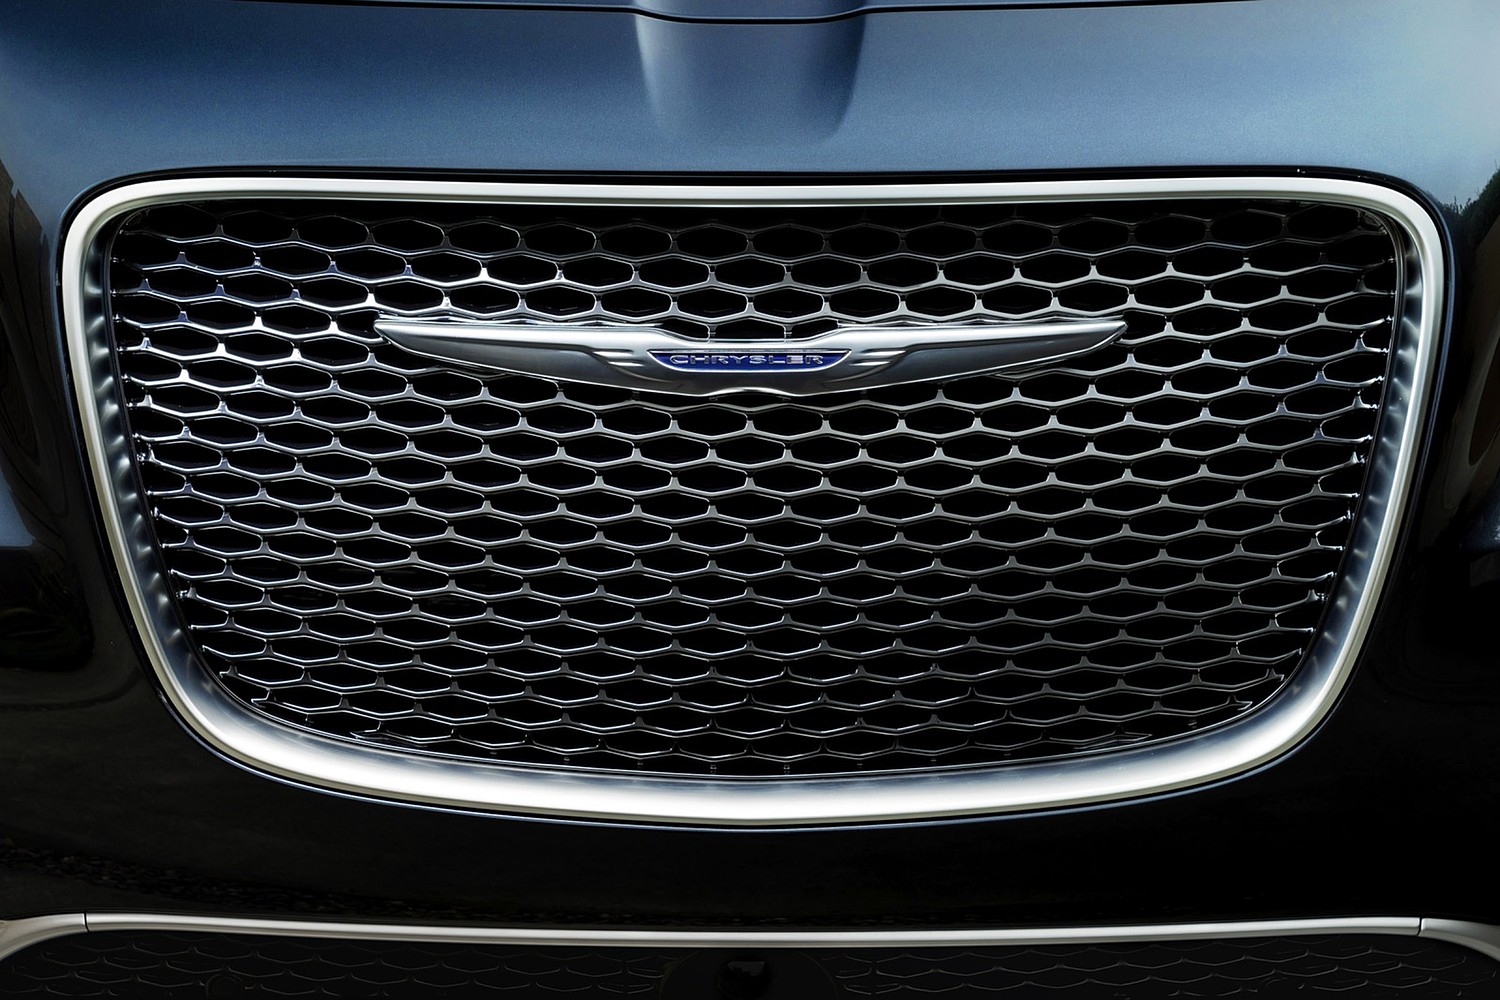 Chrysler 300 C Platinum Sedan Front Badge (2015 model year shown)